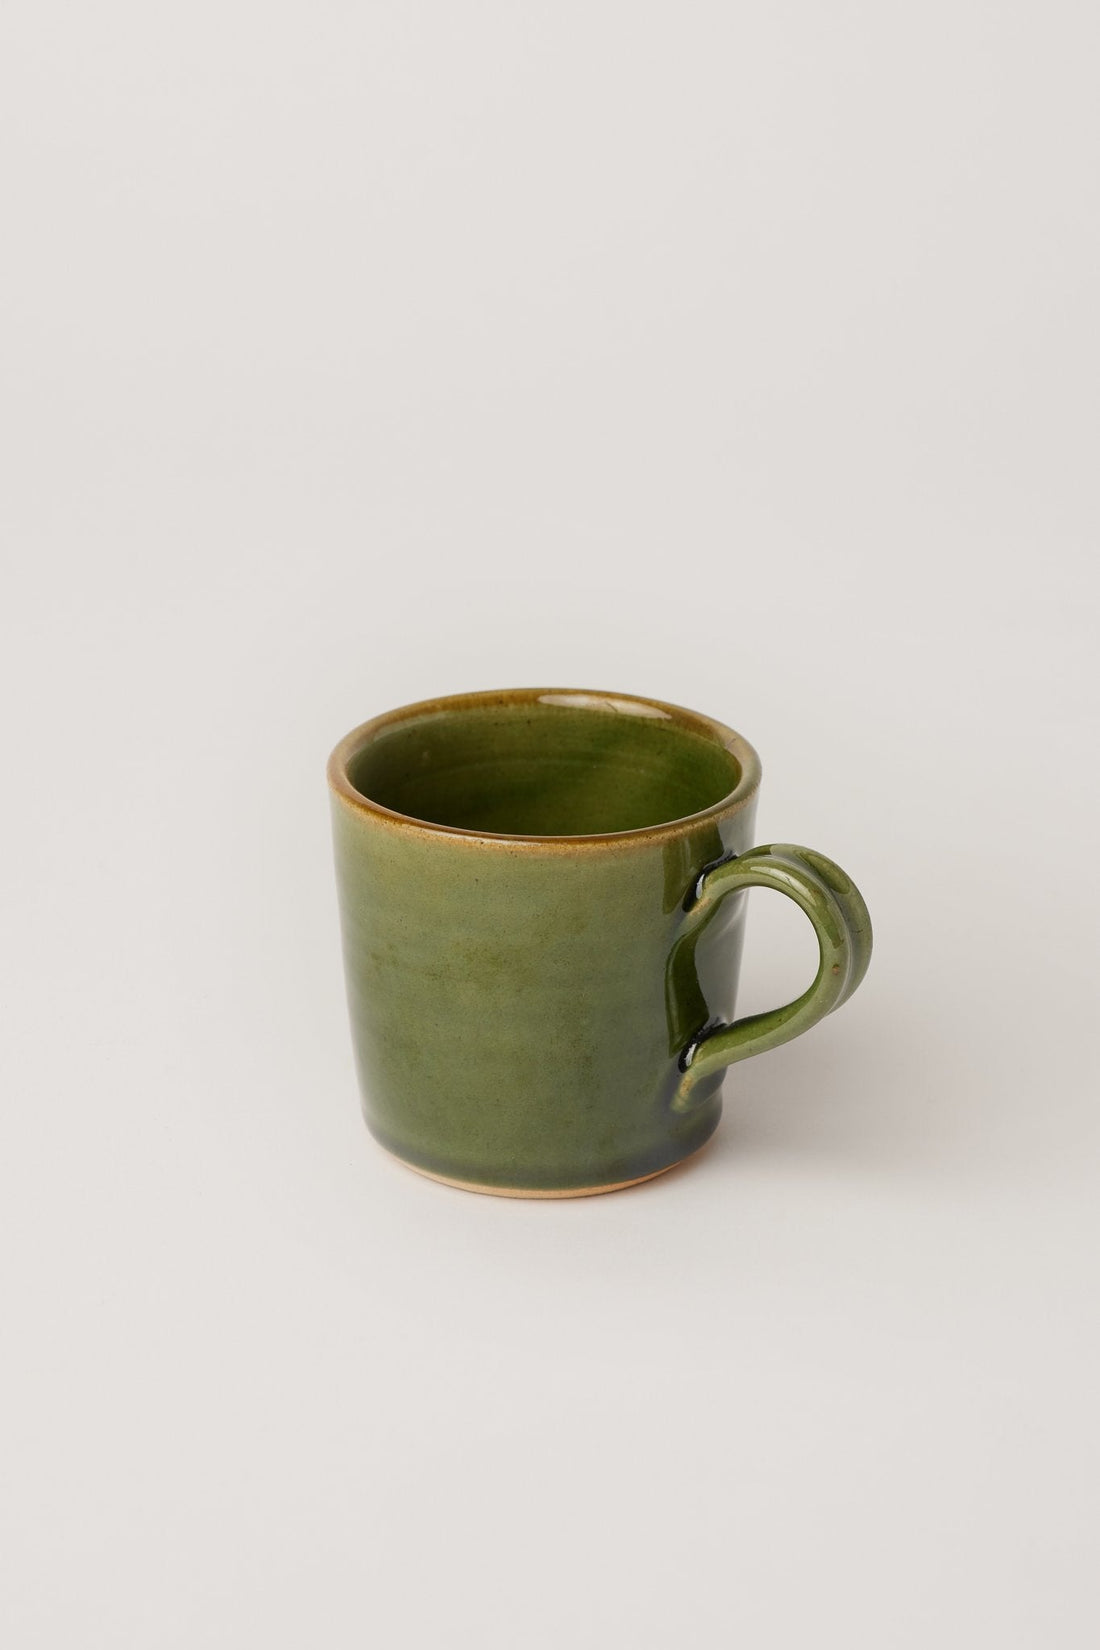 Ilai Handcrafted Stoneware Coffee Mug, Set of 2